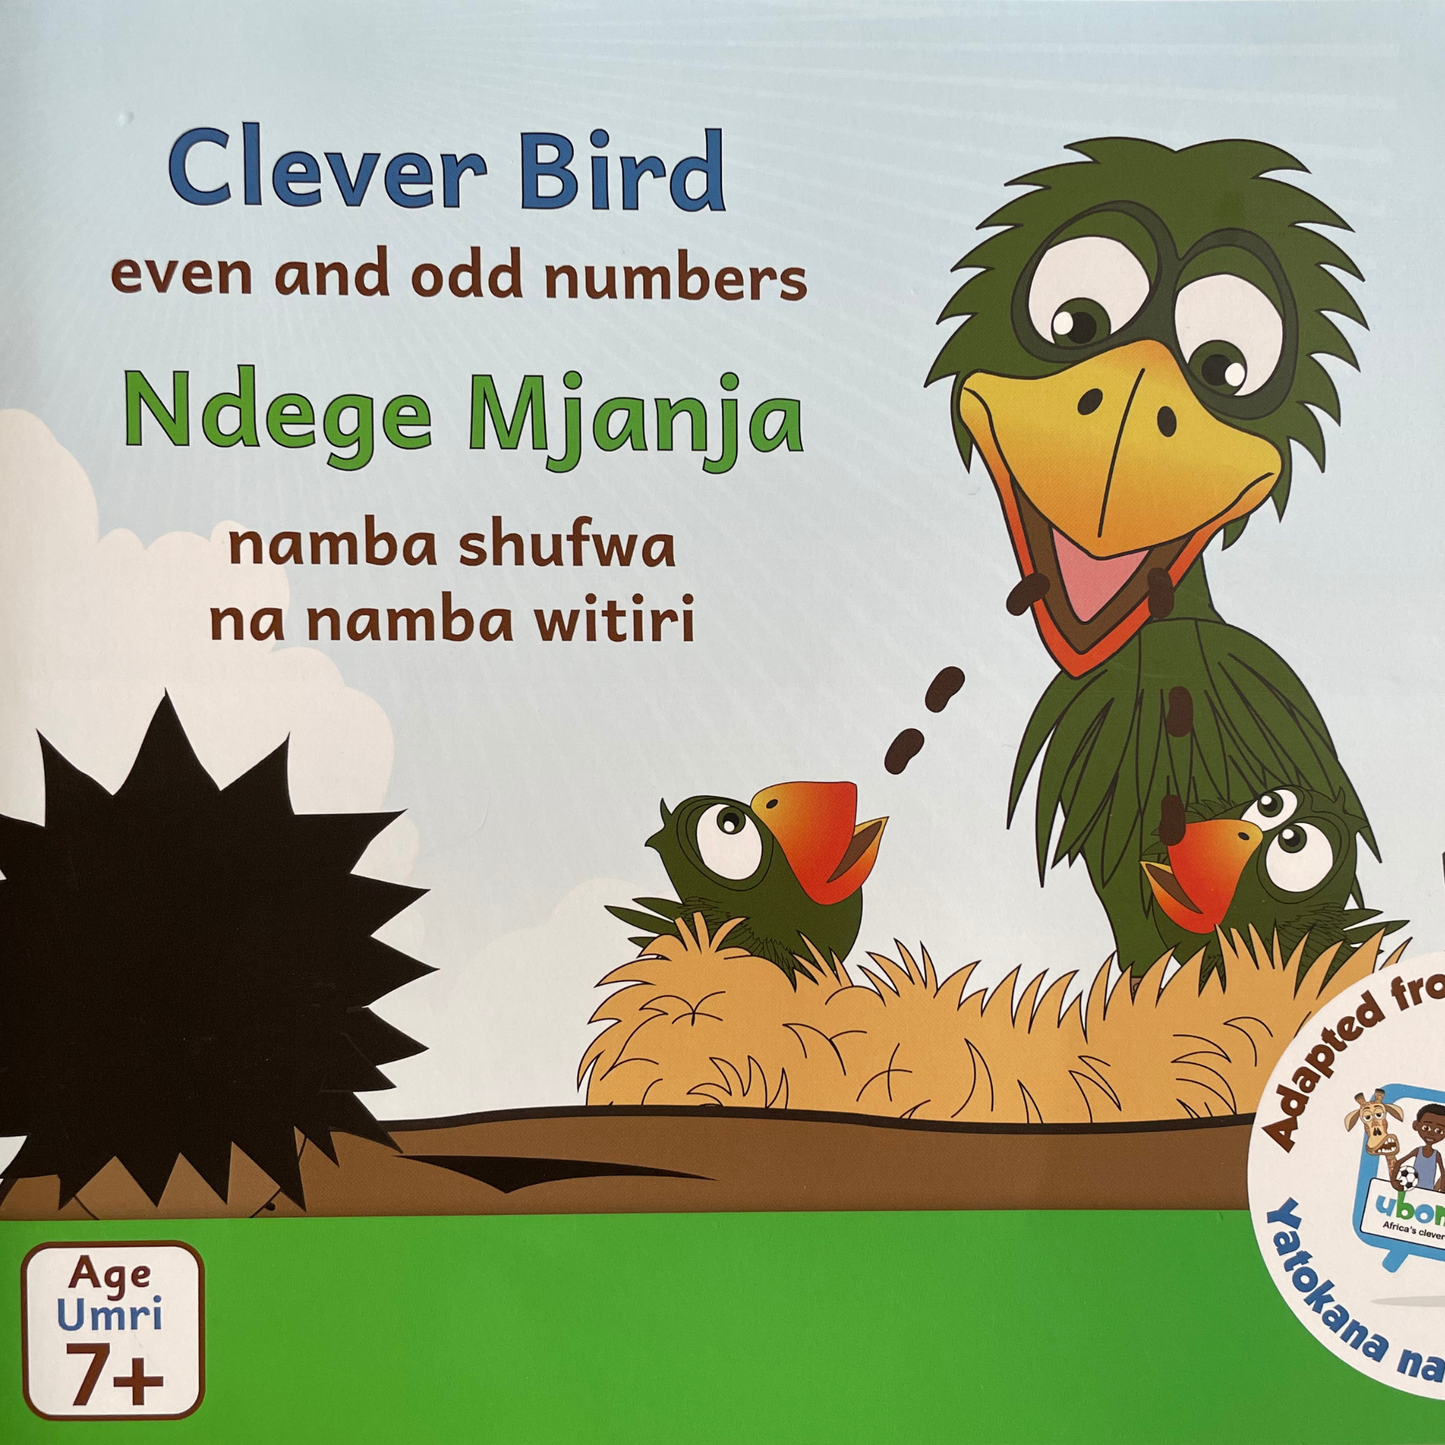 Clever bird: even and odd numbers / Ndege mjanja: Namba shufwa na namba witiri